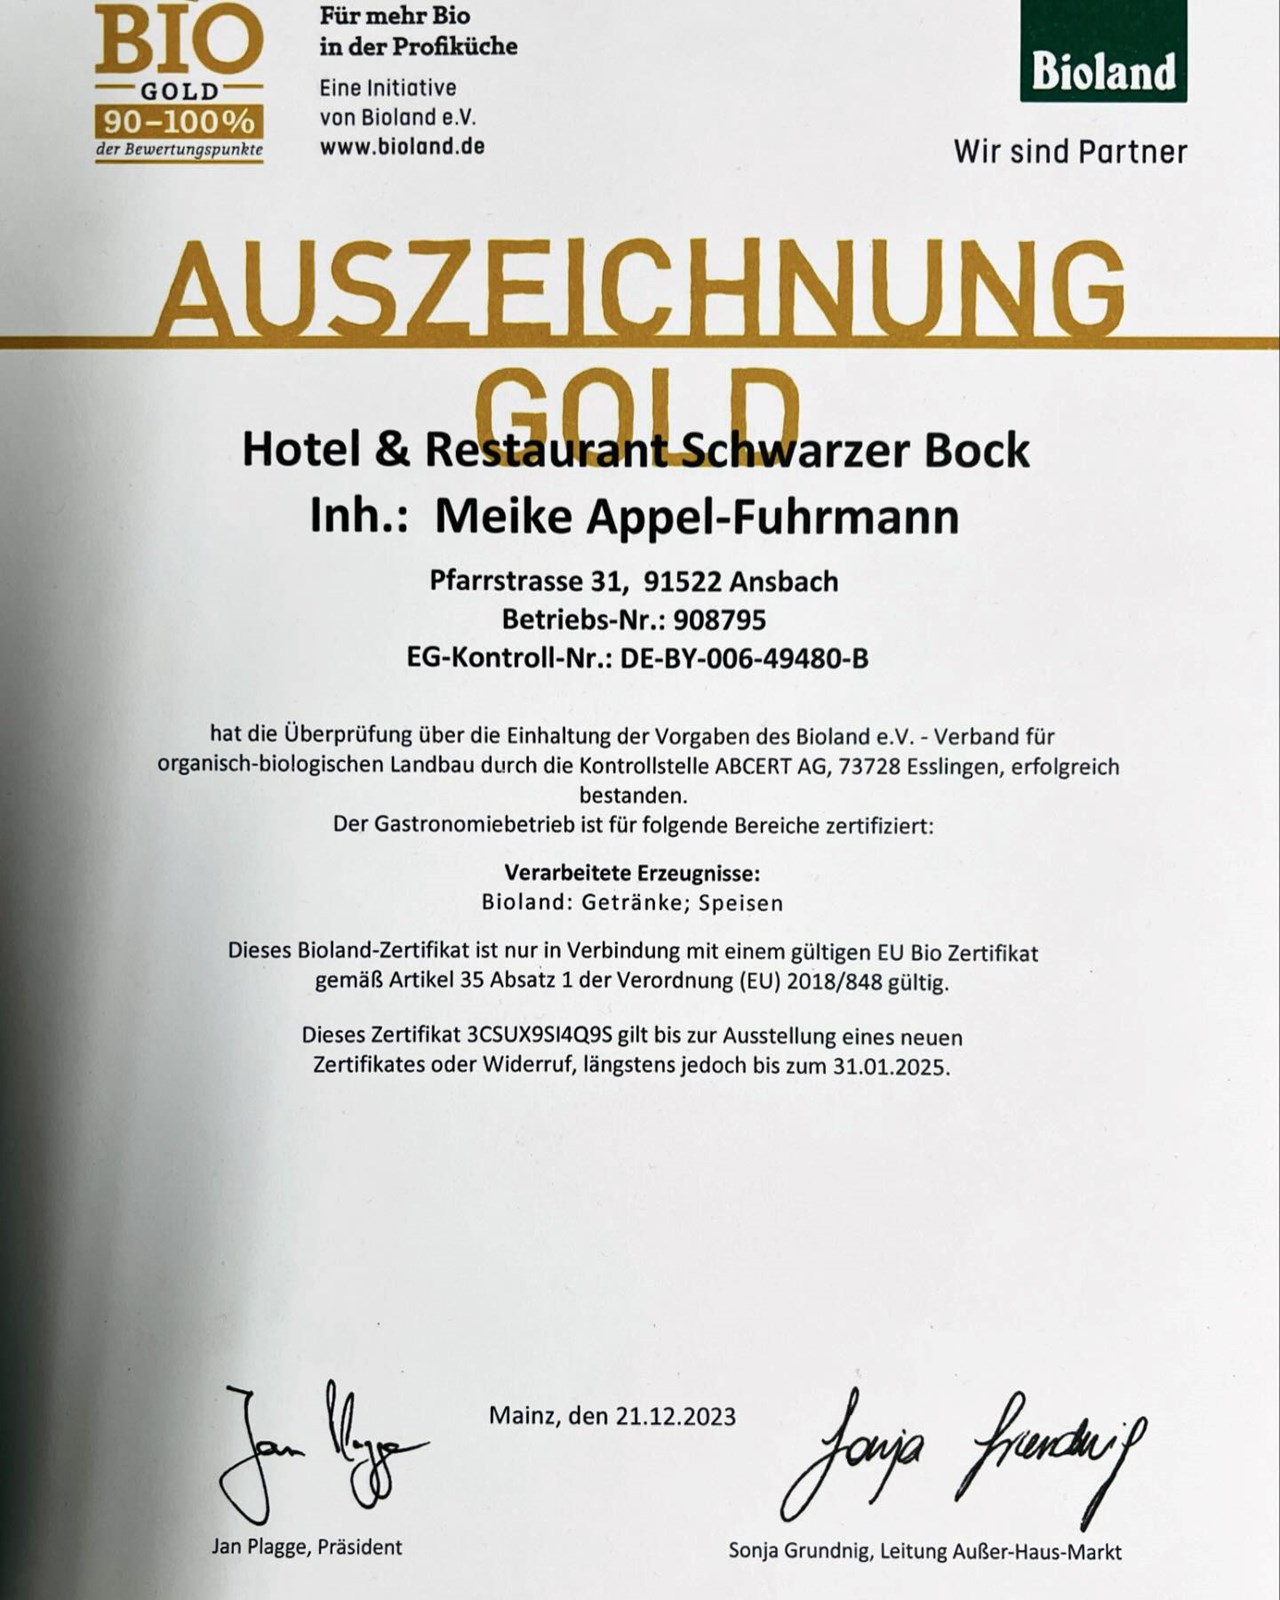 Bio-Boutiquehotel Schwarzer Bock Evidence certificates Bioland 100% organic gold